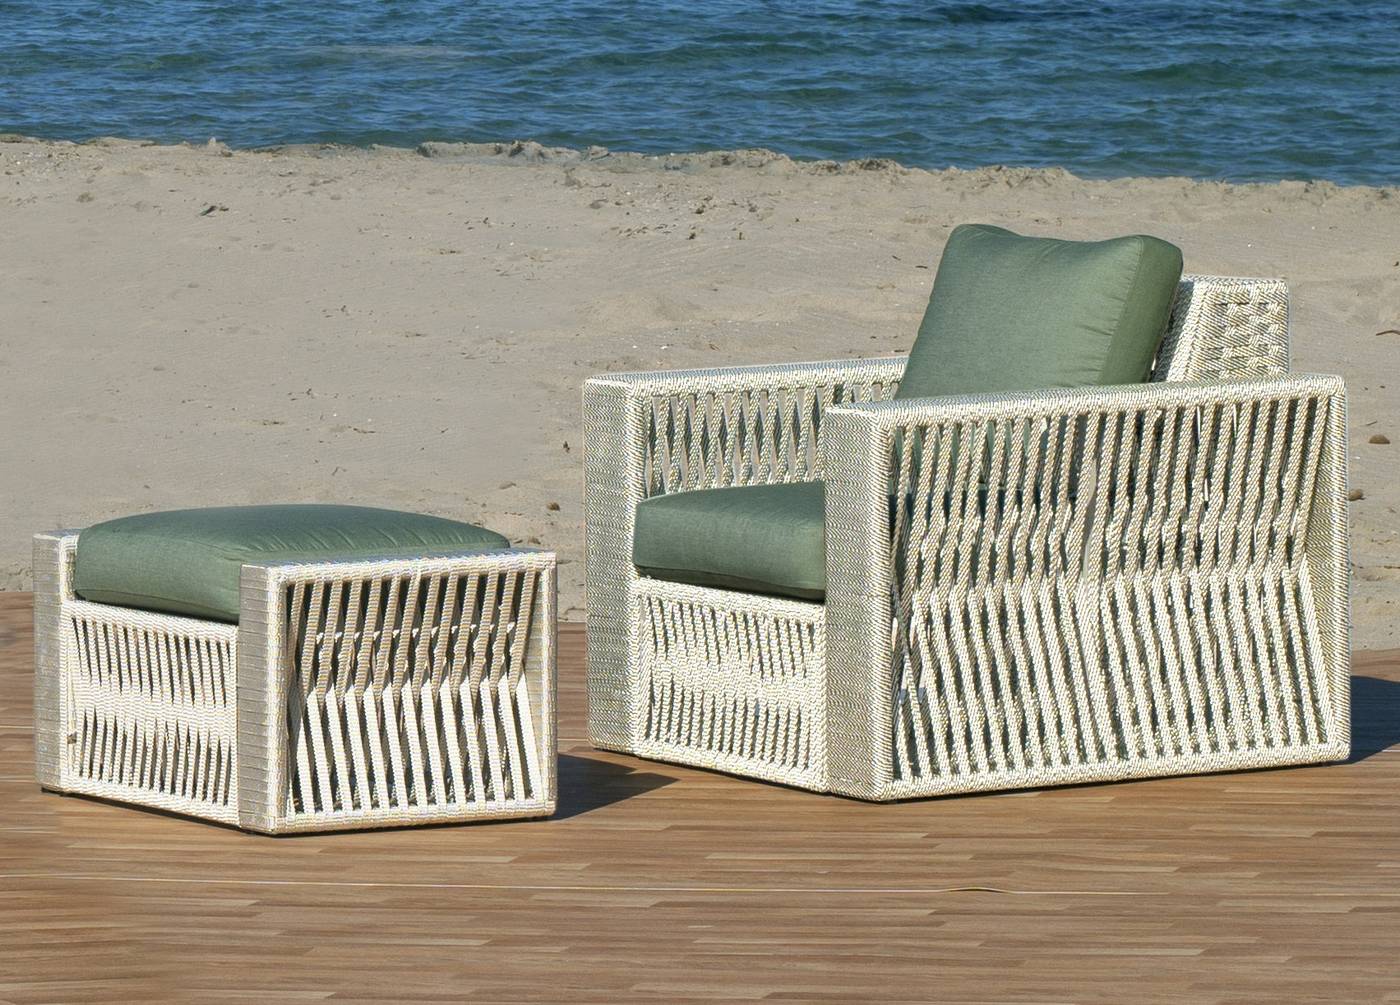 Set Aluminio Prusia-8 - Conjunto aluminio-cuerda: 1 sofá de 3 plazas + 2 sillones + 1 mesa de centro. Disponible en color blanco, gris, oro o champagne.